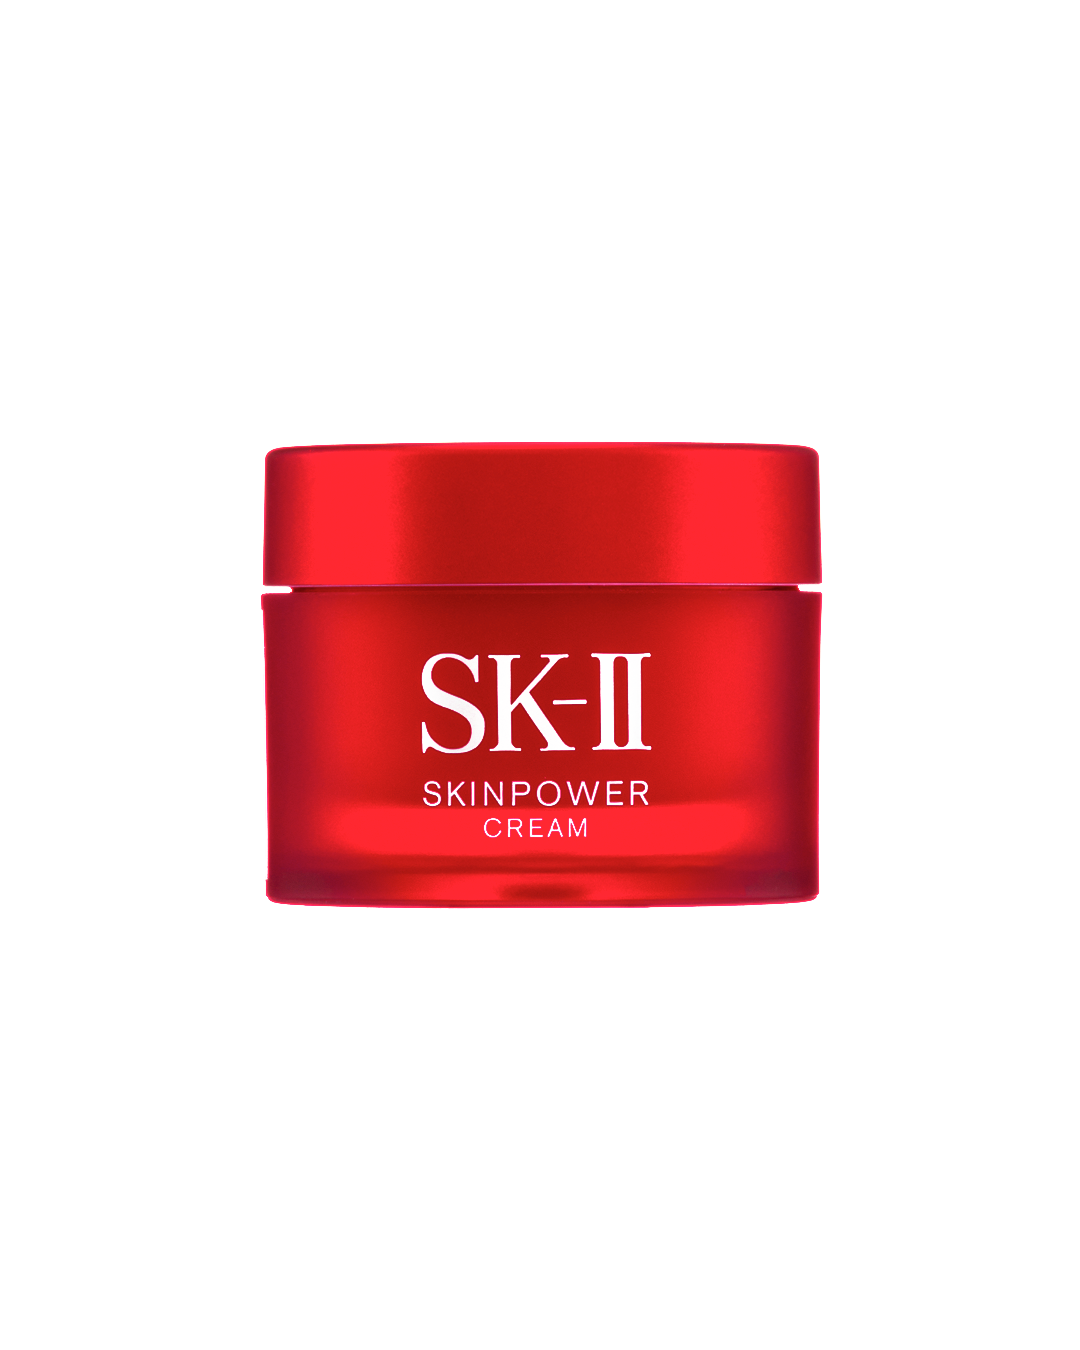 SK-II Skinpower Cream (15g) - Best Buy World Philippines